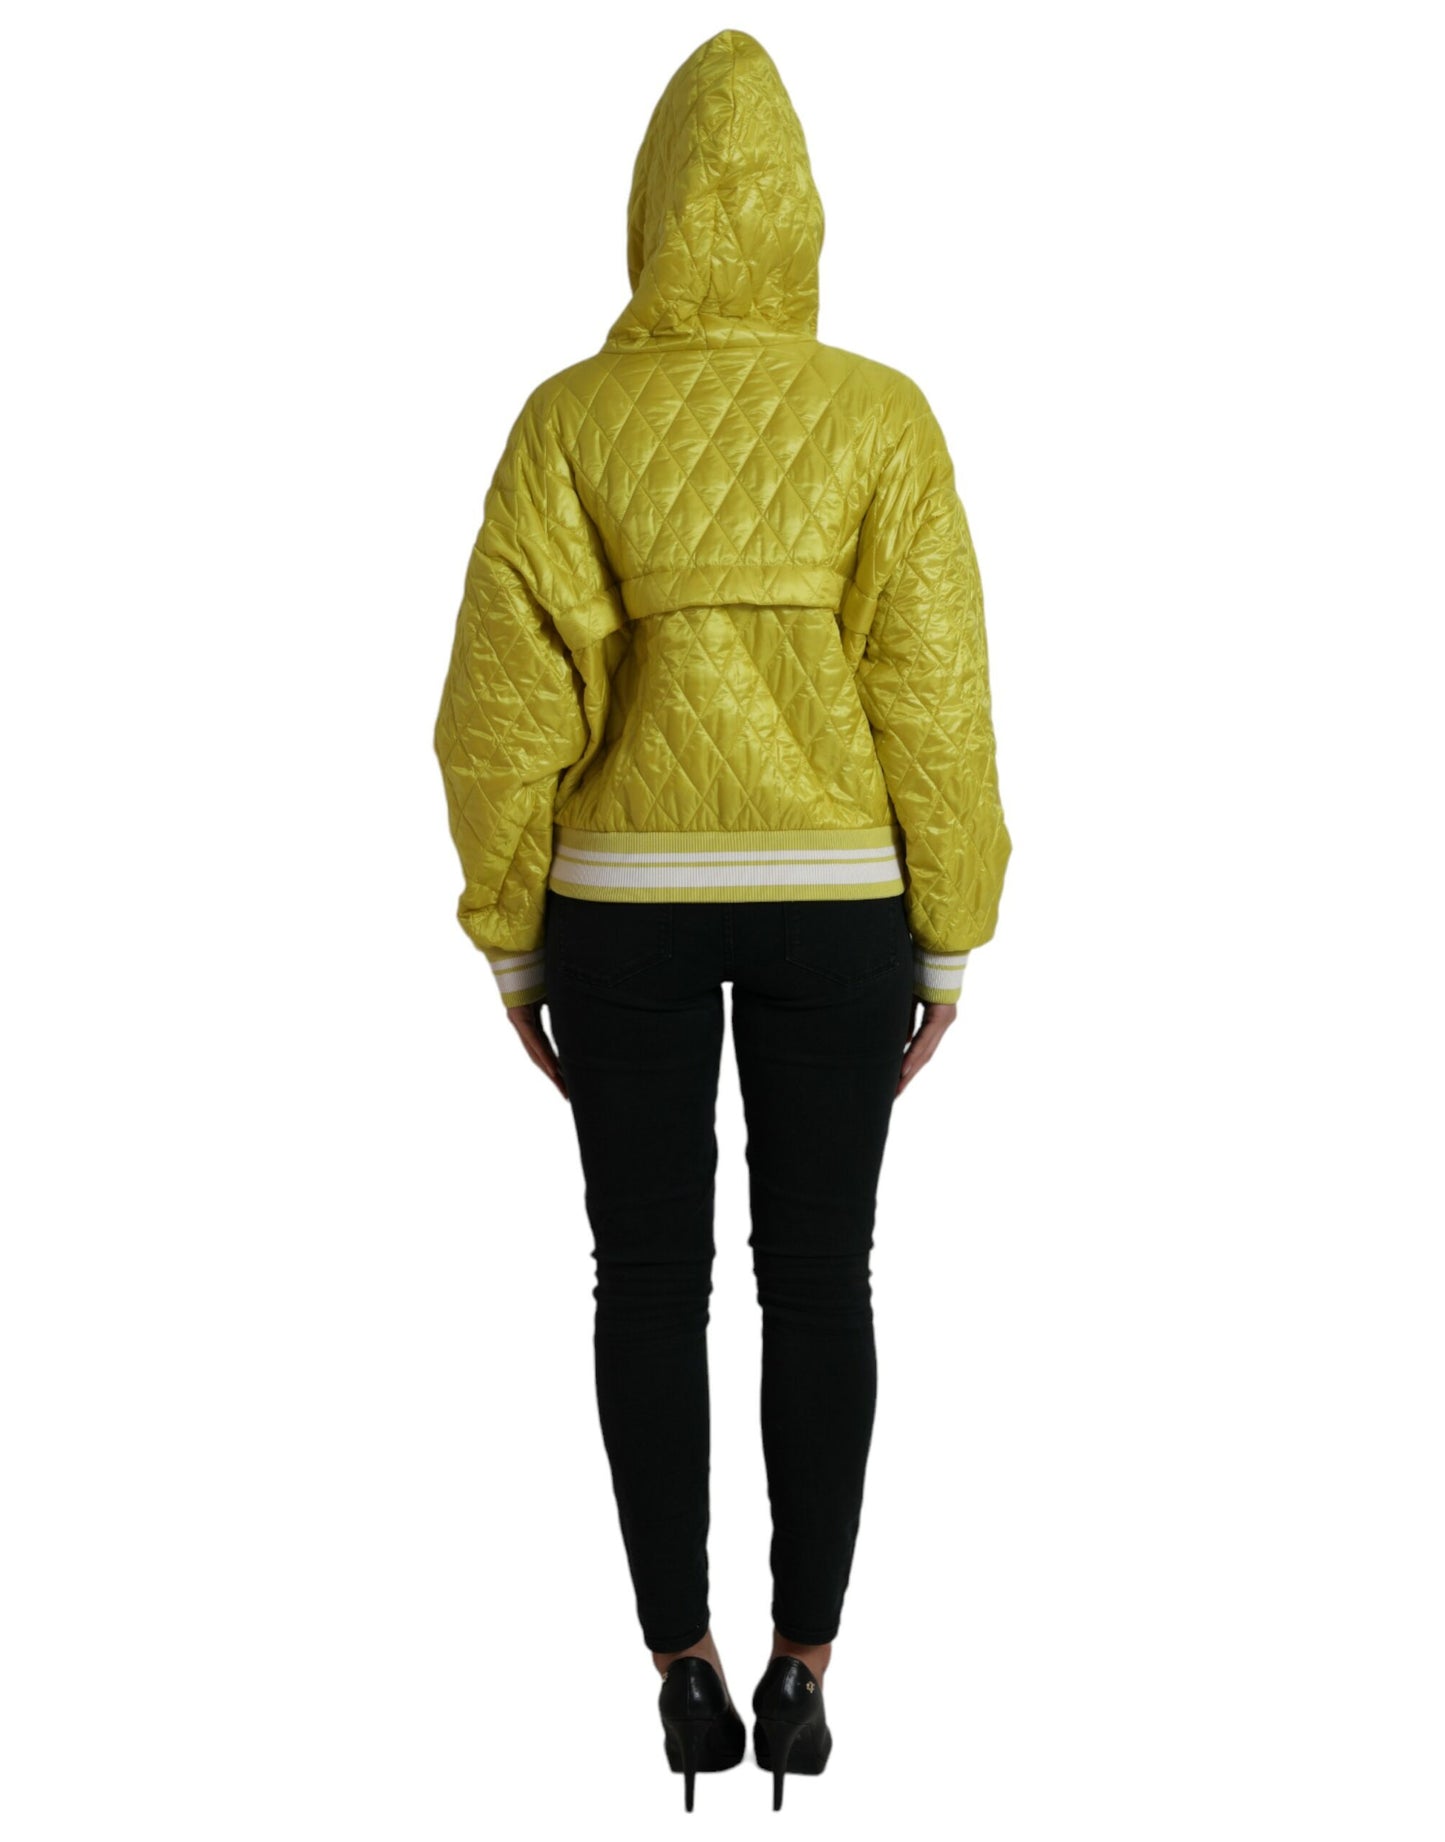 Radiant Yellow Hooded Jacket